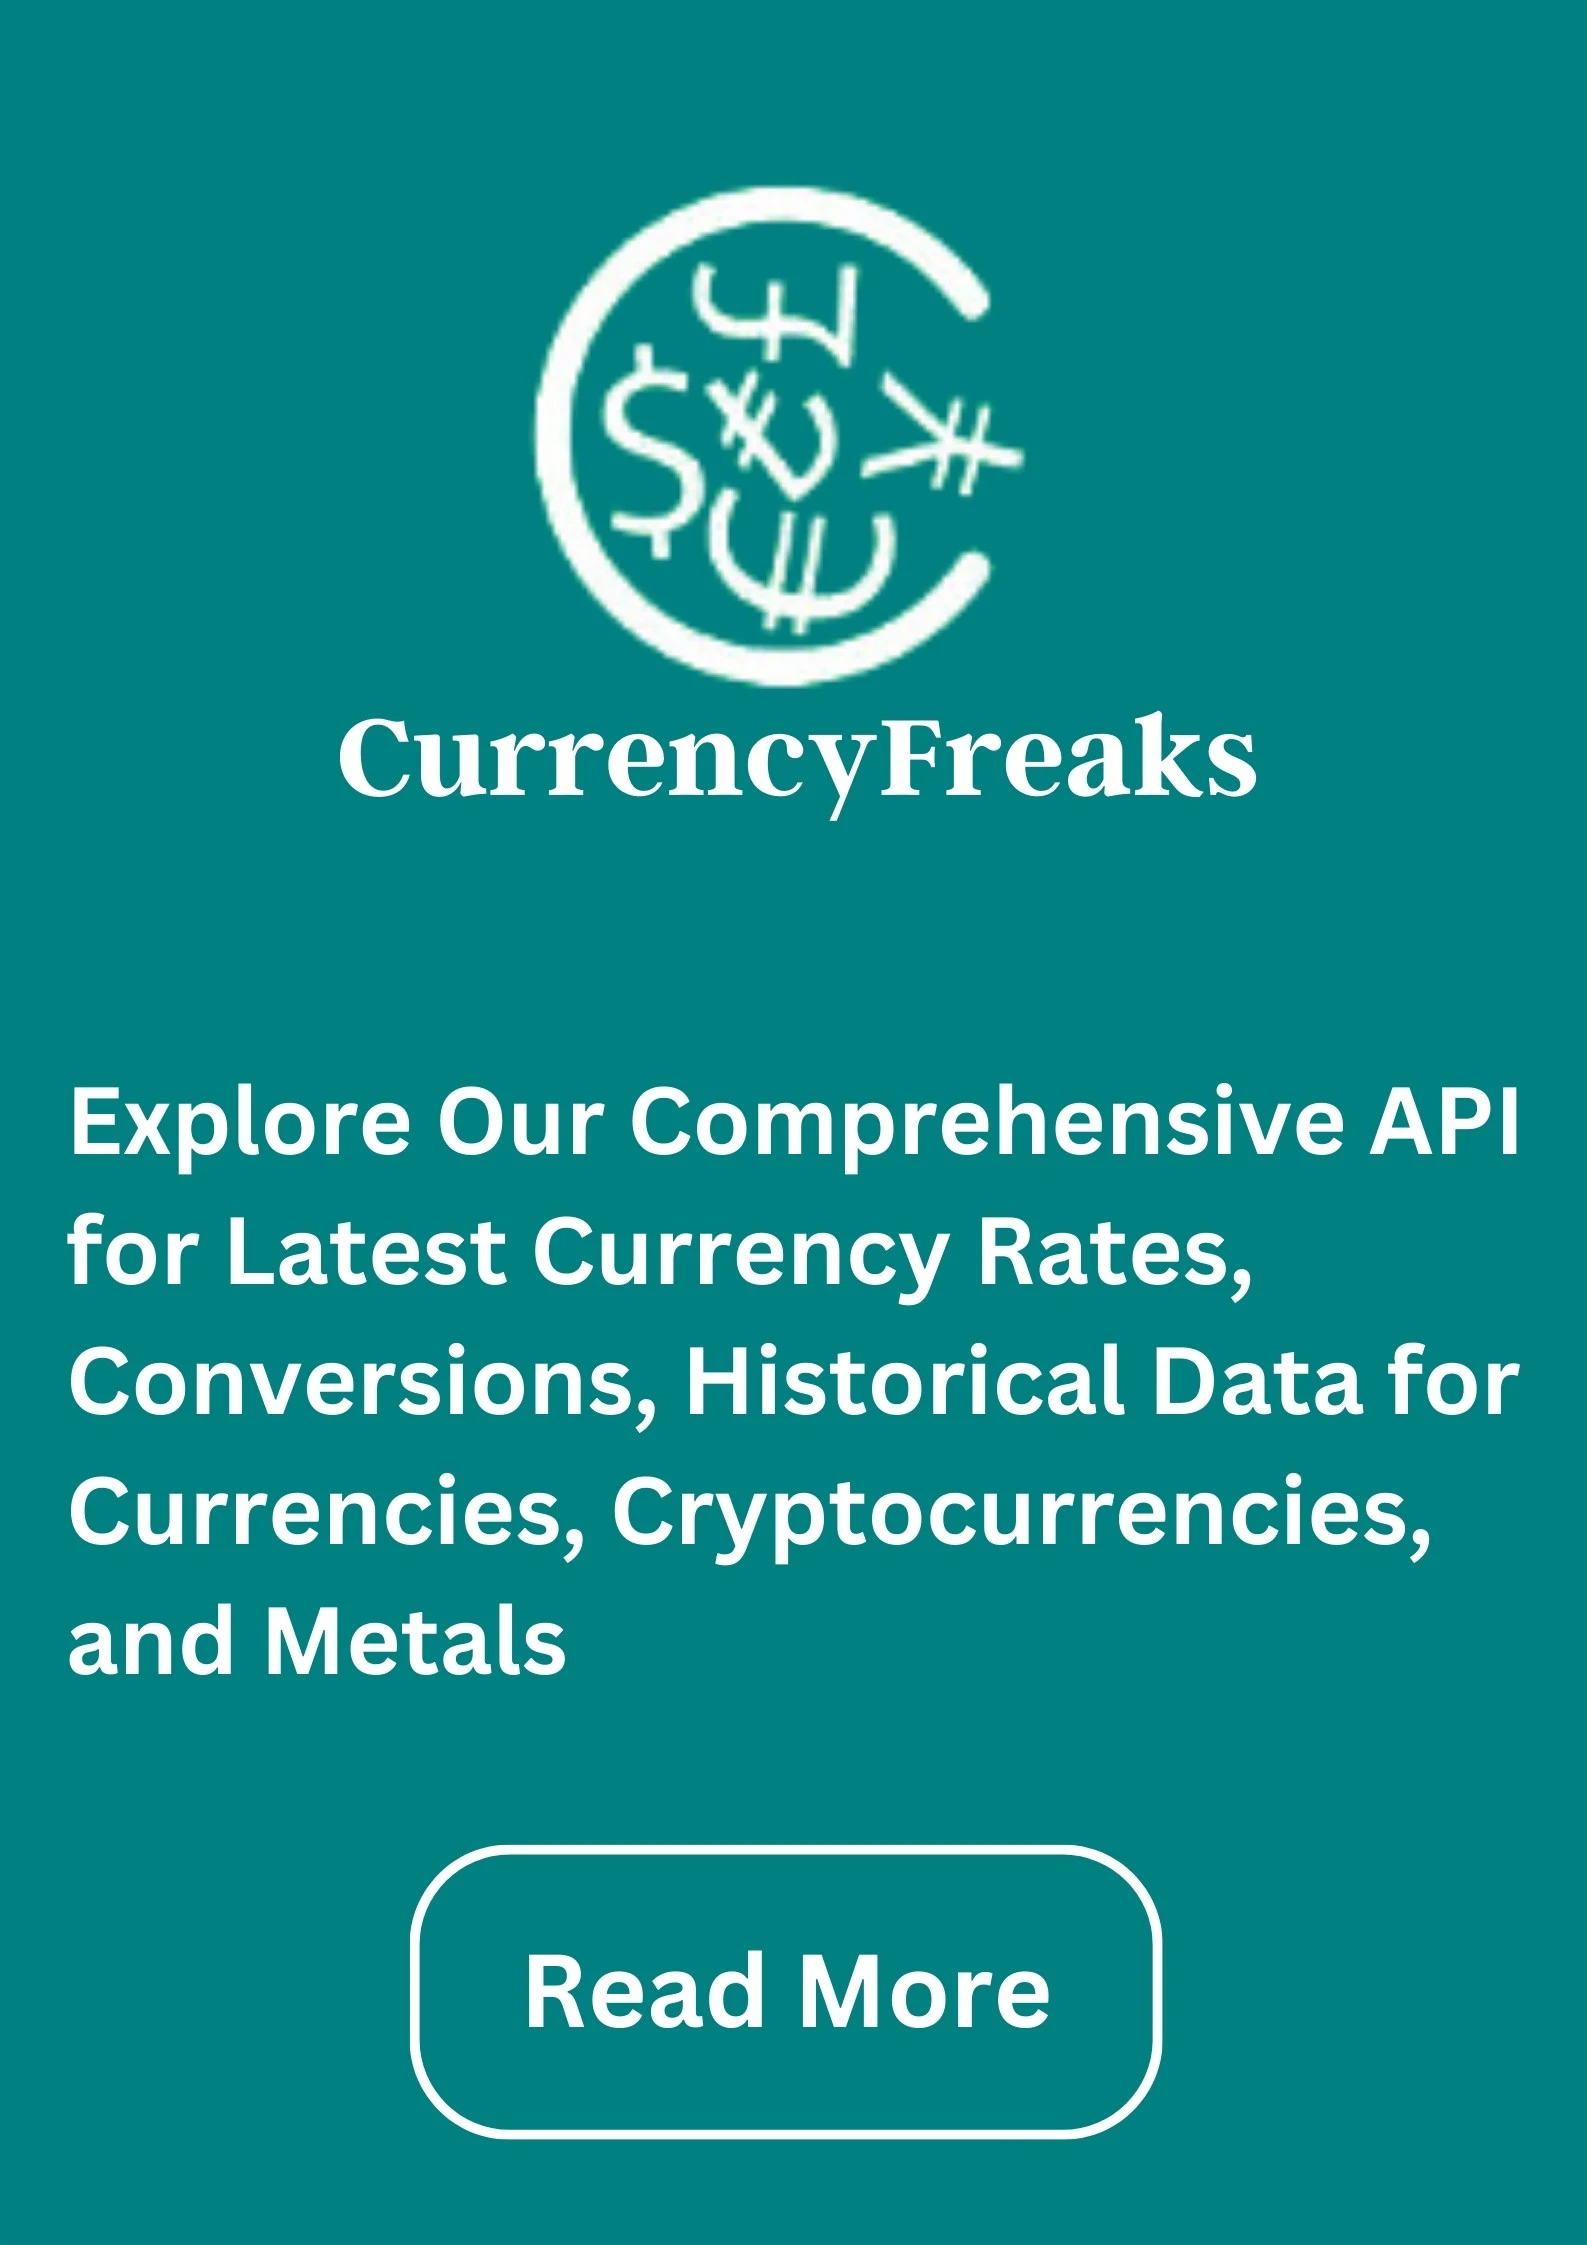 CurrencyFreaks API